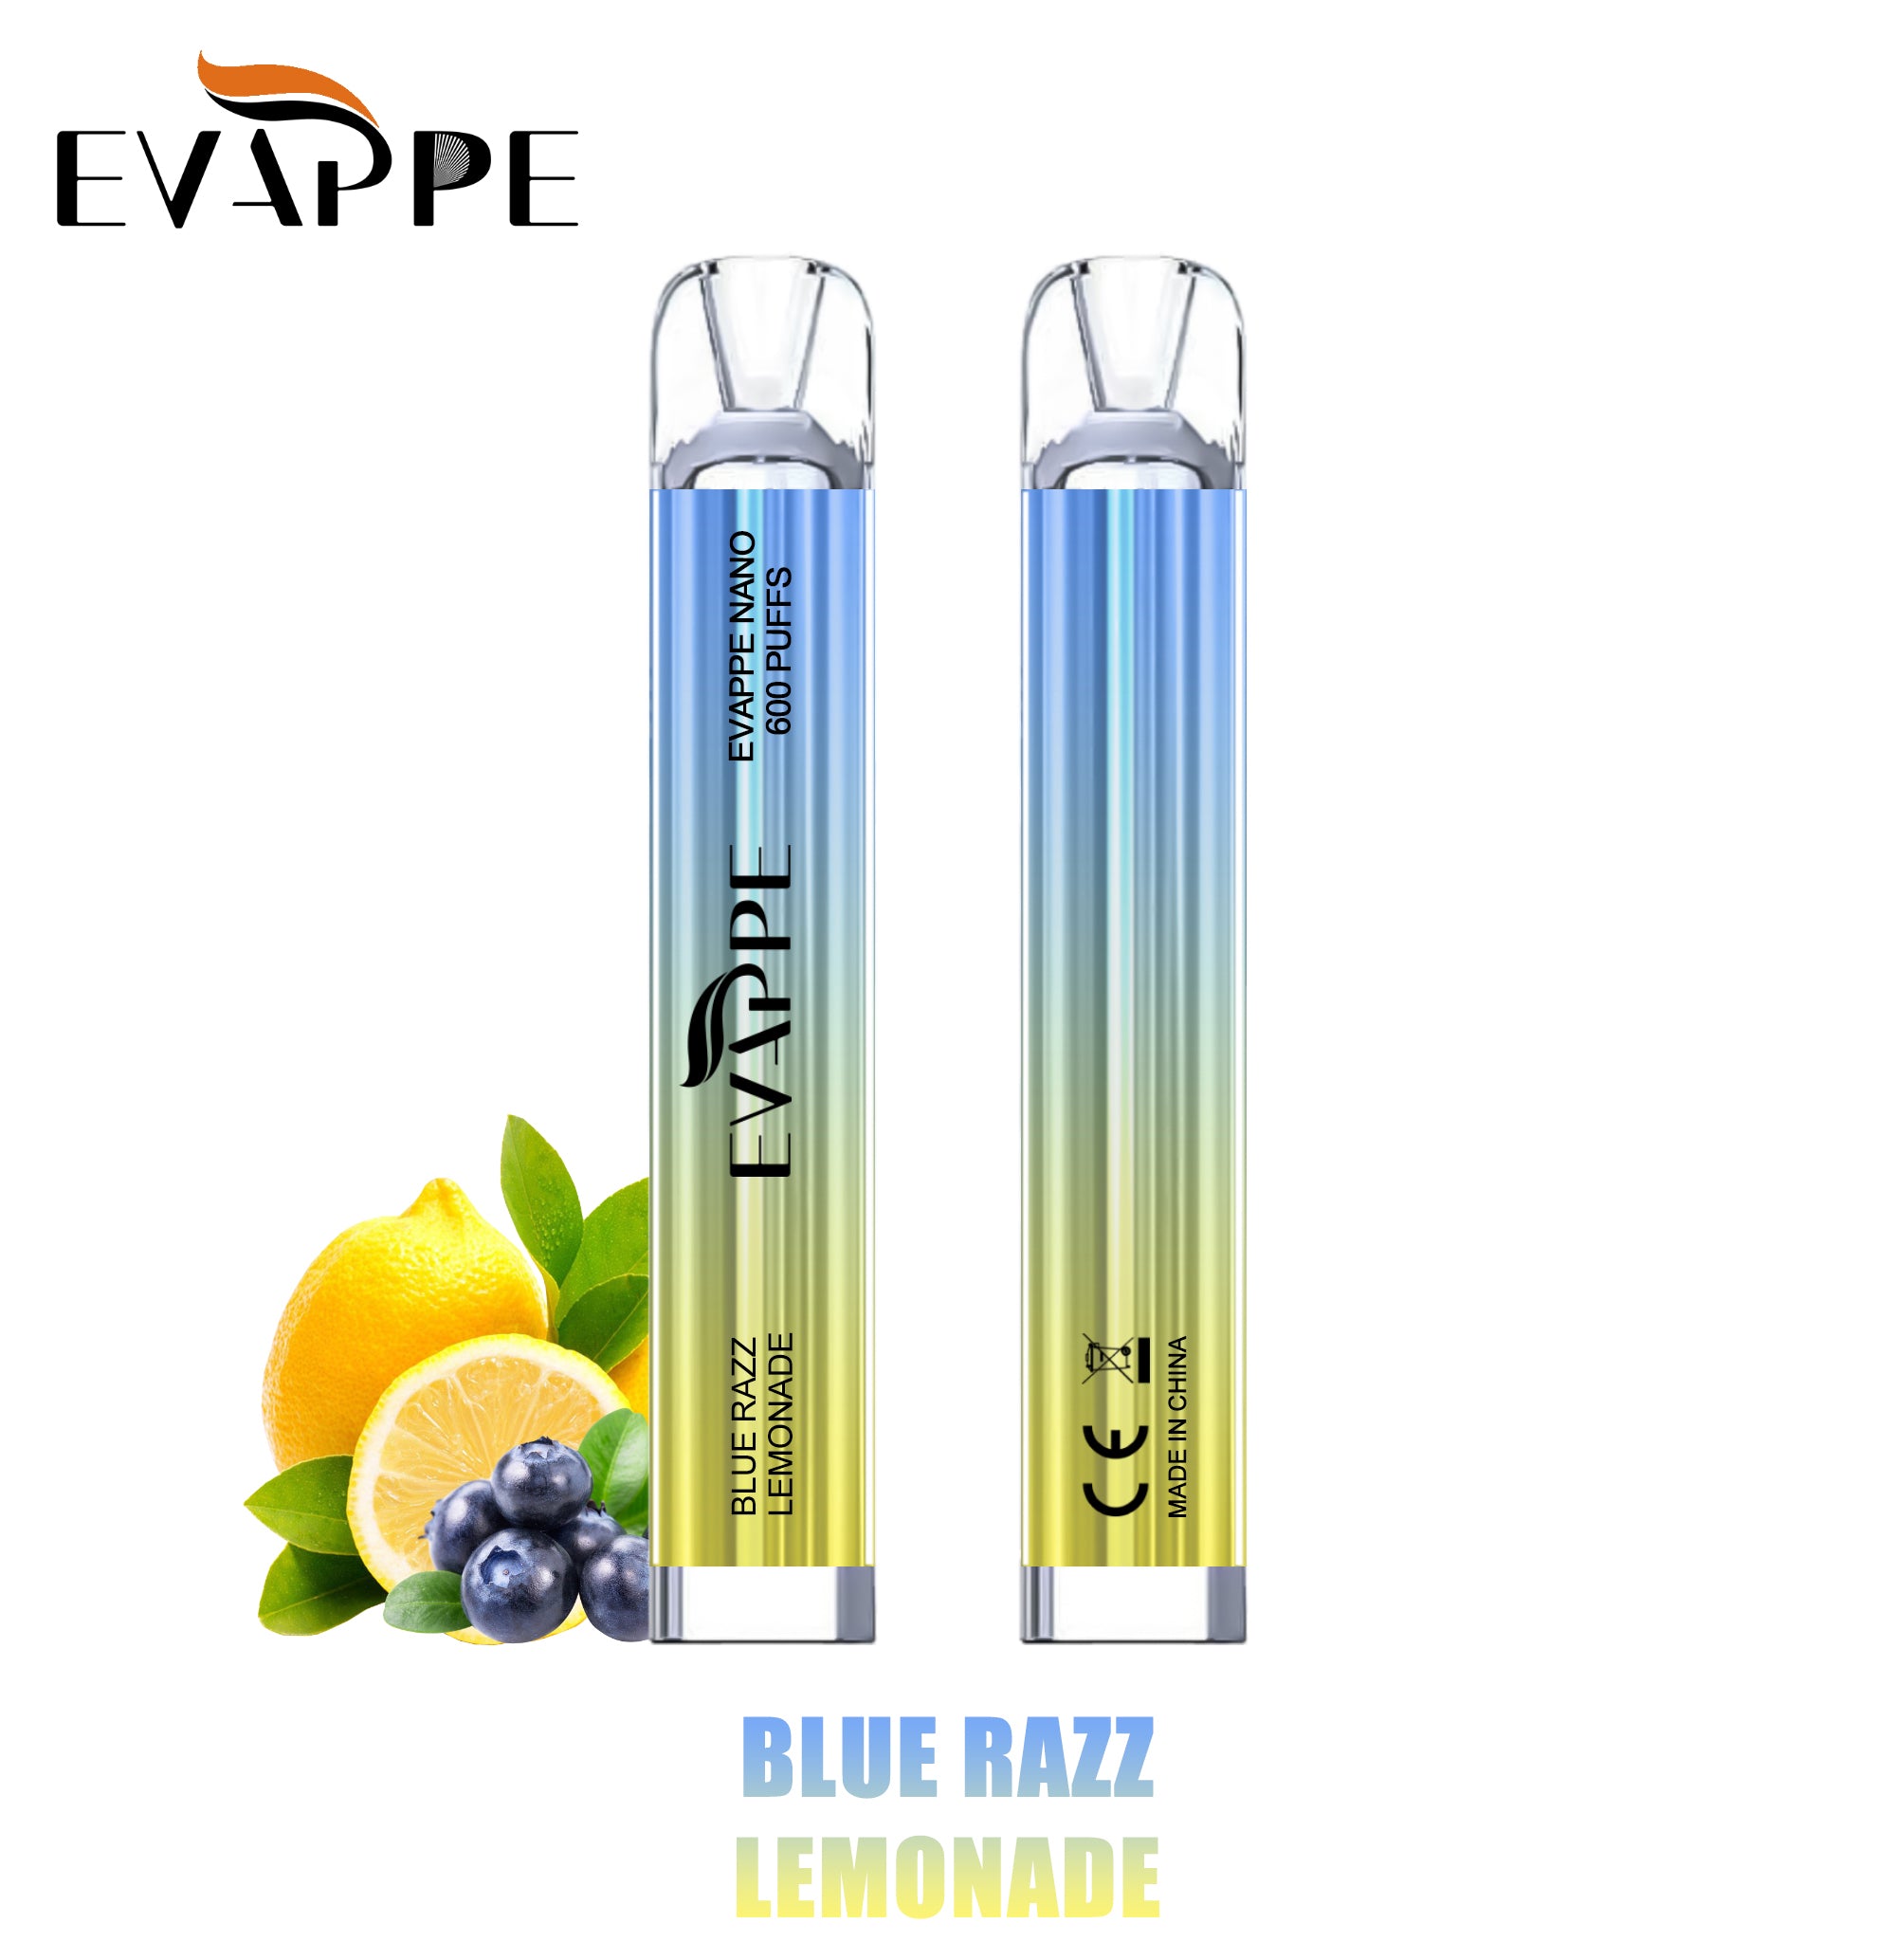 Evappe Nano Blue Razz Lemonade 600